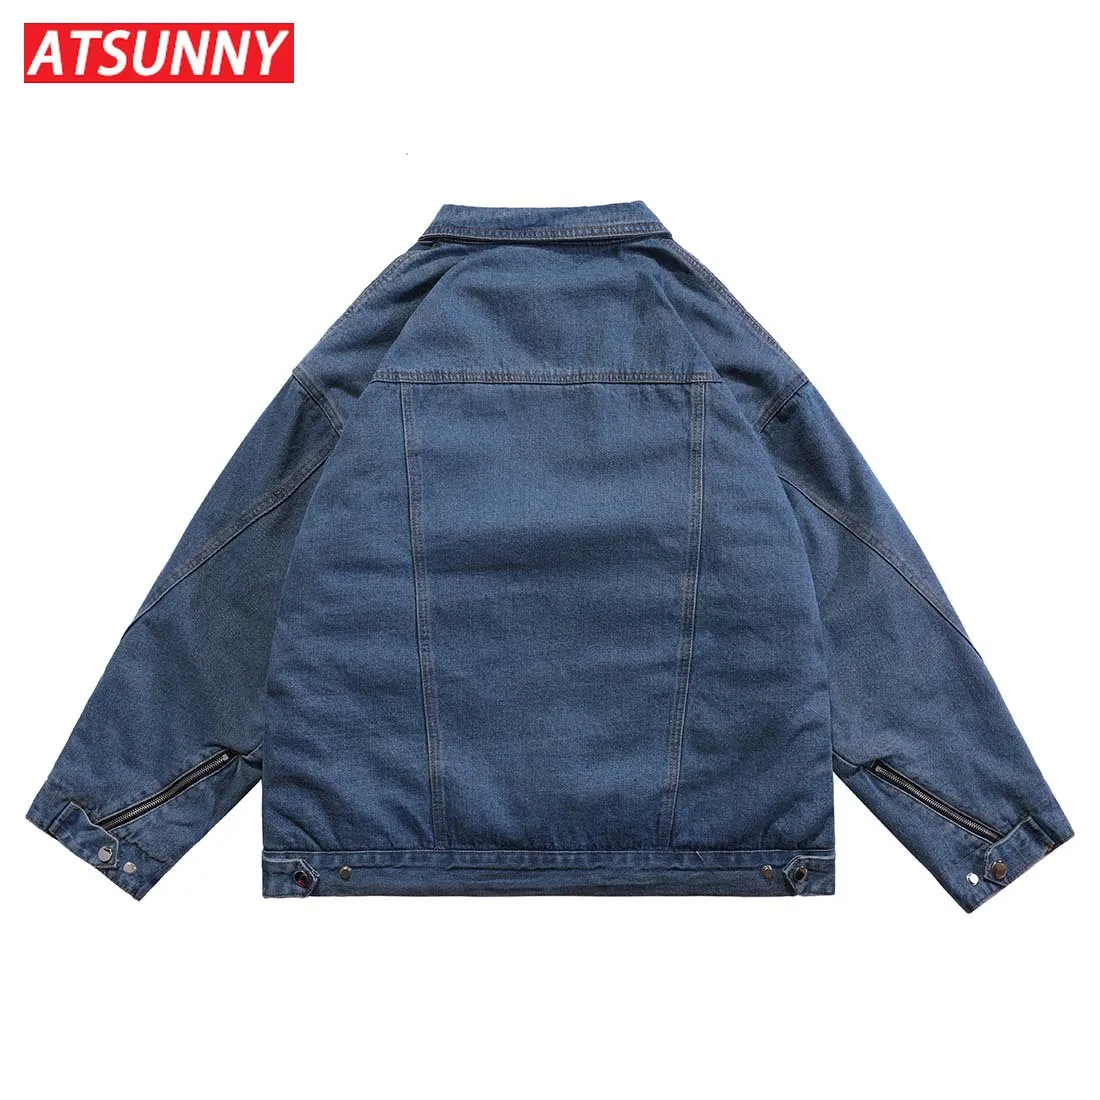 ATSUNNY Hip Hop Mens Jeans Jackets Fashion Hooded Denim Coats Harajuku Style Man Autumn and Winter Retro Clothes Streetwear